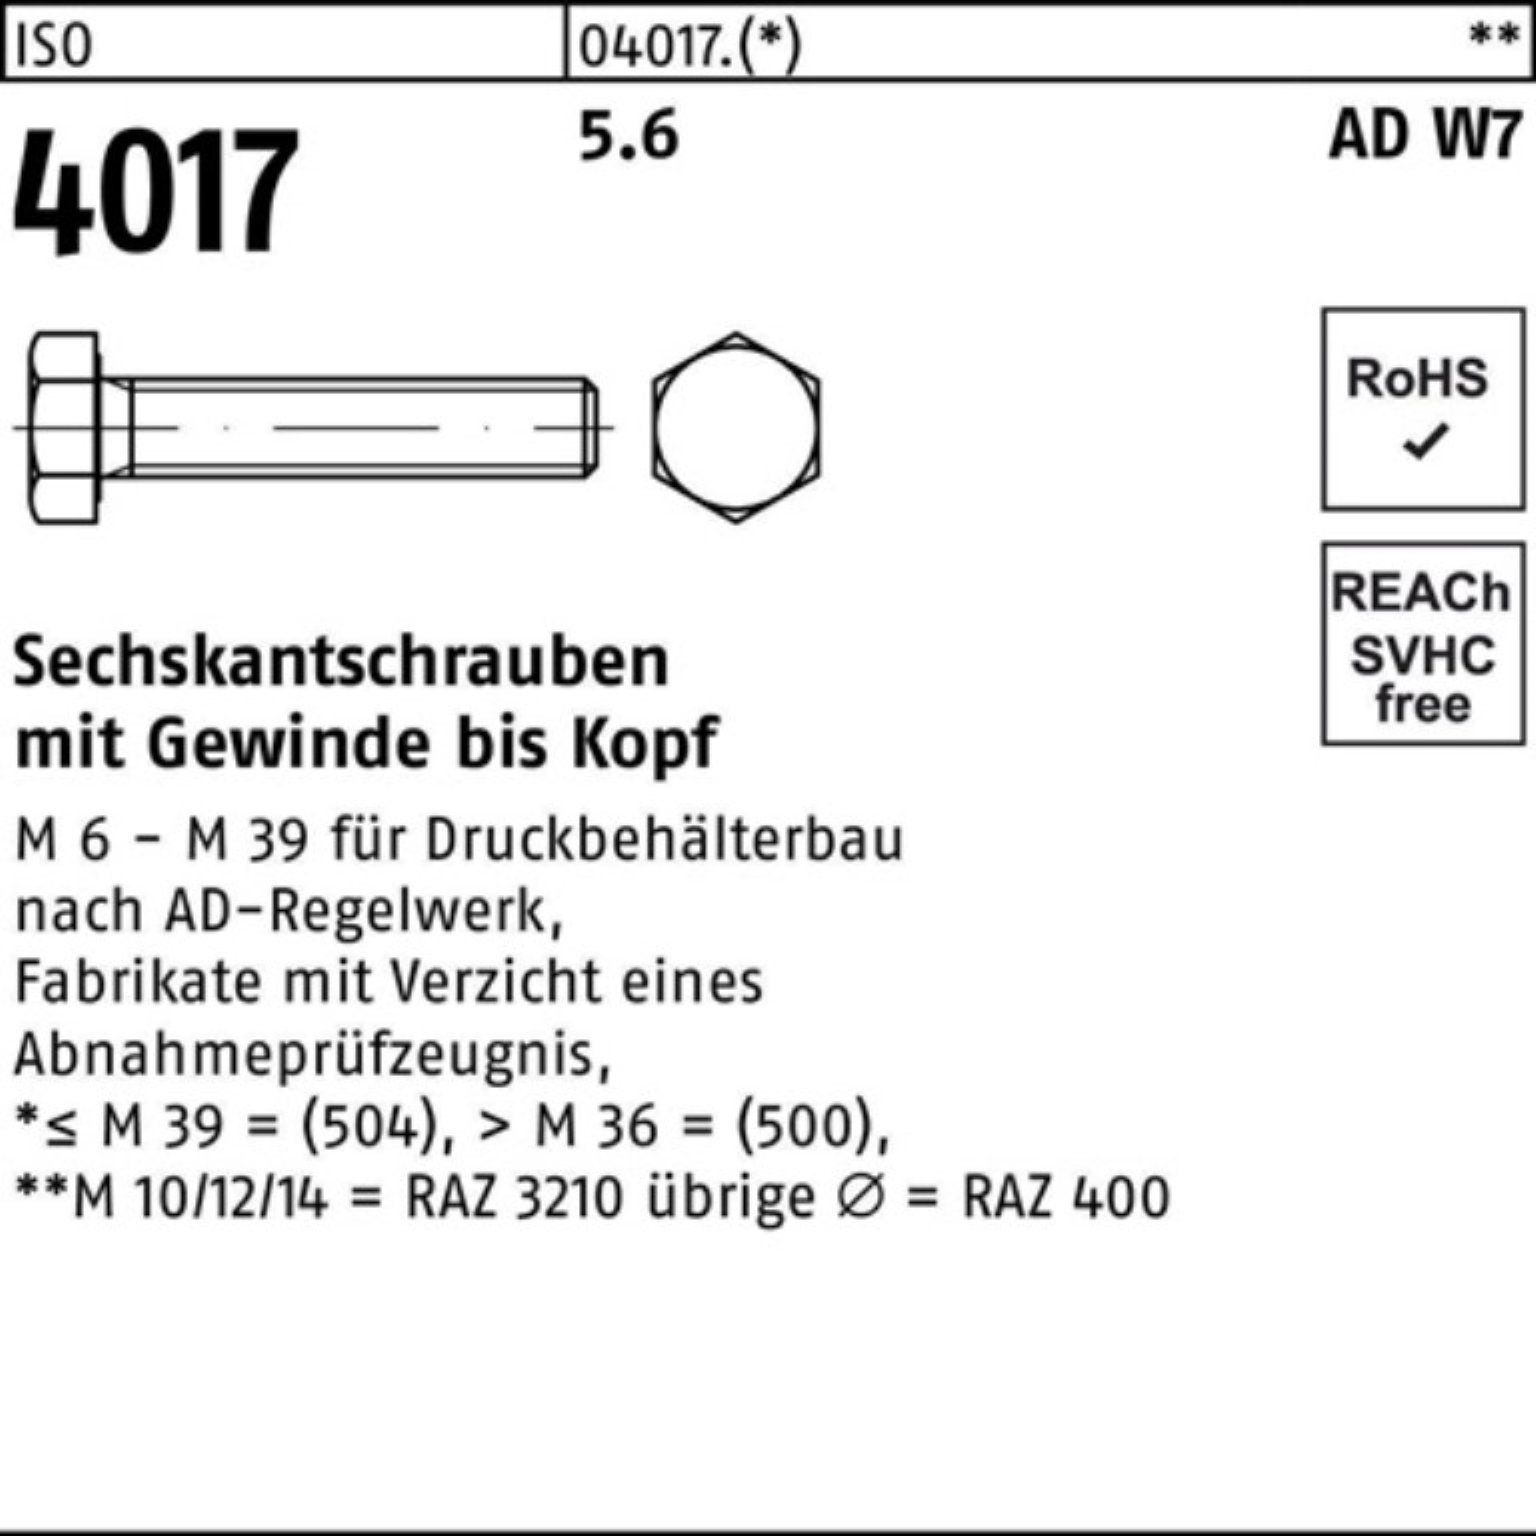 Bufab Sechskantschraube 100er Pack Sechskantschraube ISO 4017 VG M16x 70 5.6 AD W7 25 Stück I